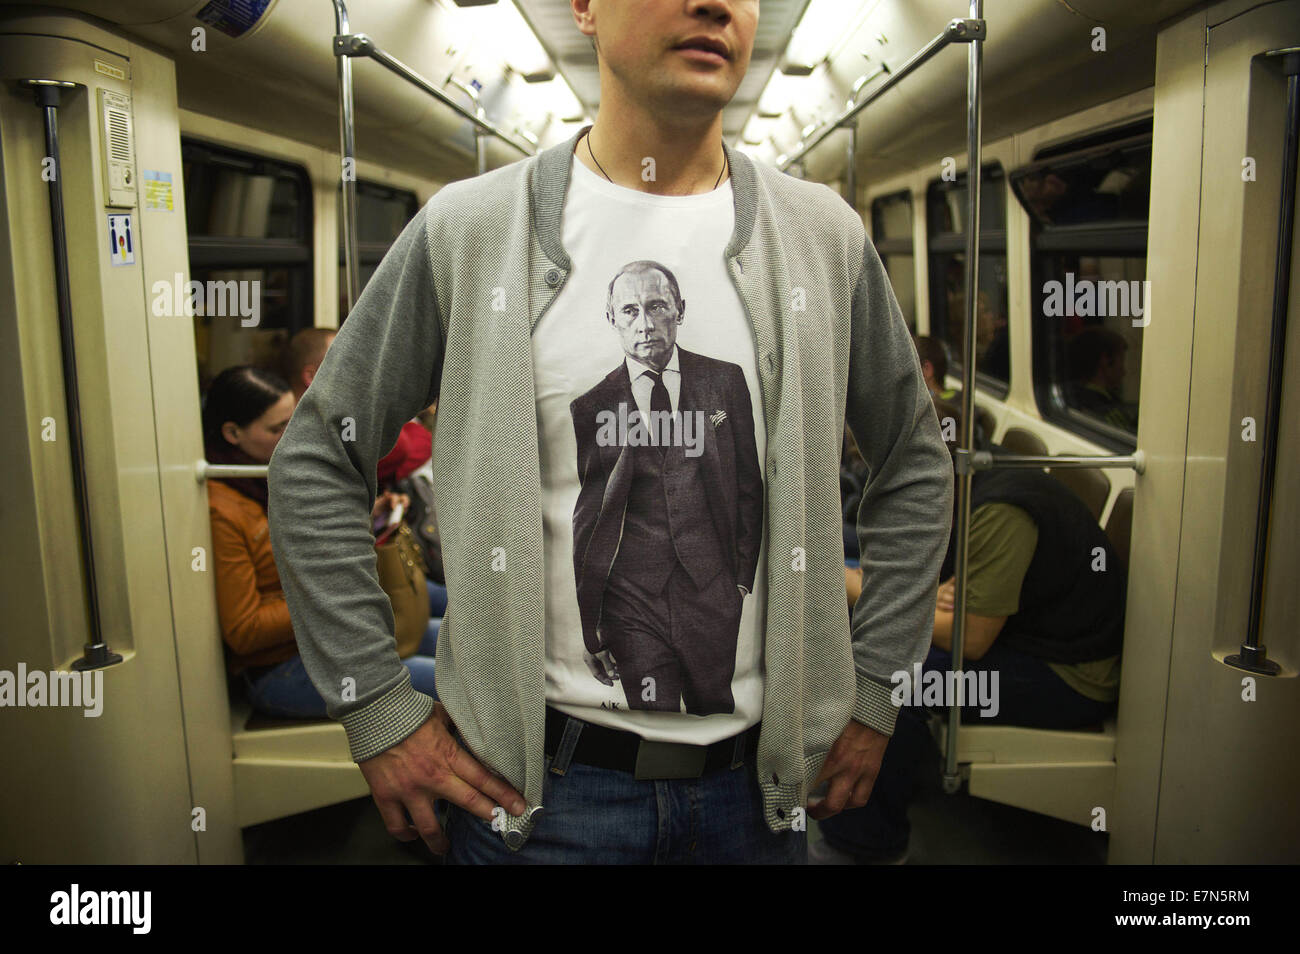 Moscow, Russia. 21st Sep, 2014. A t-shirt with a portrait of Vladimir Putin. Moscow underground. © Anna Sergeeva/ZUMA Wire/Alamy Live News Stock Photo